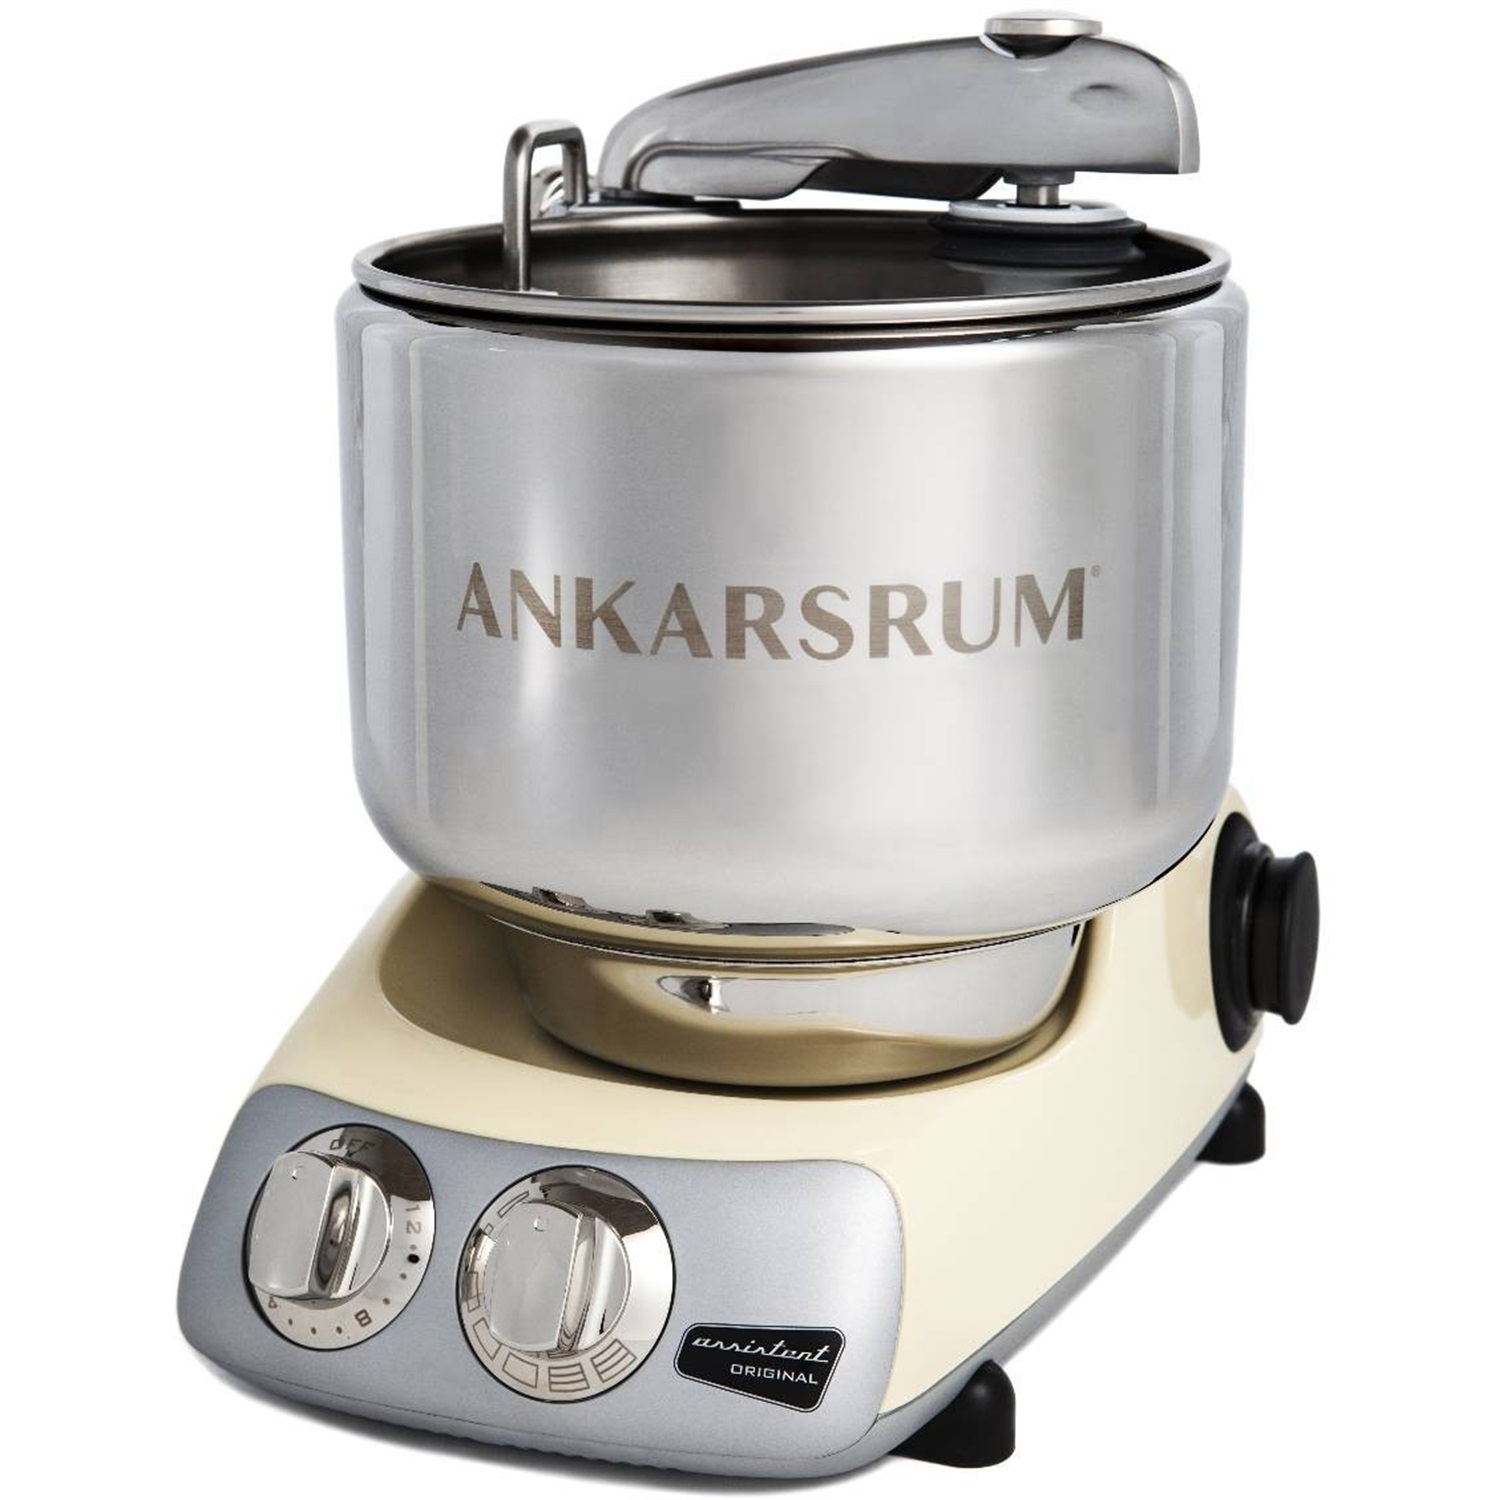 Ankarsrum Original 6230 kneedmachine Crème